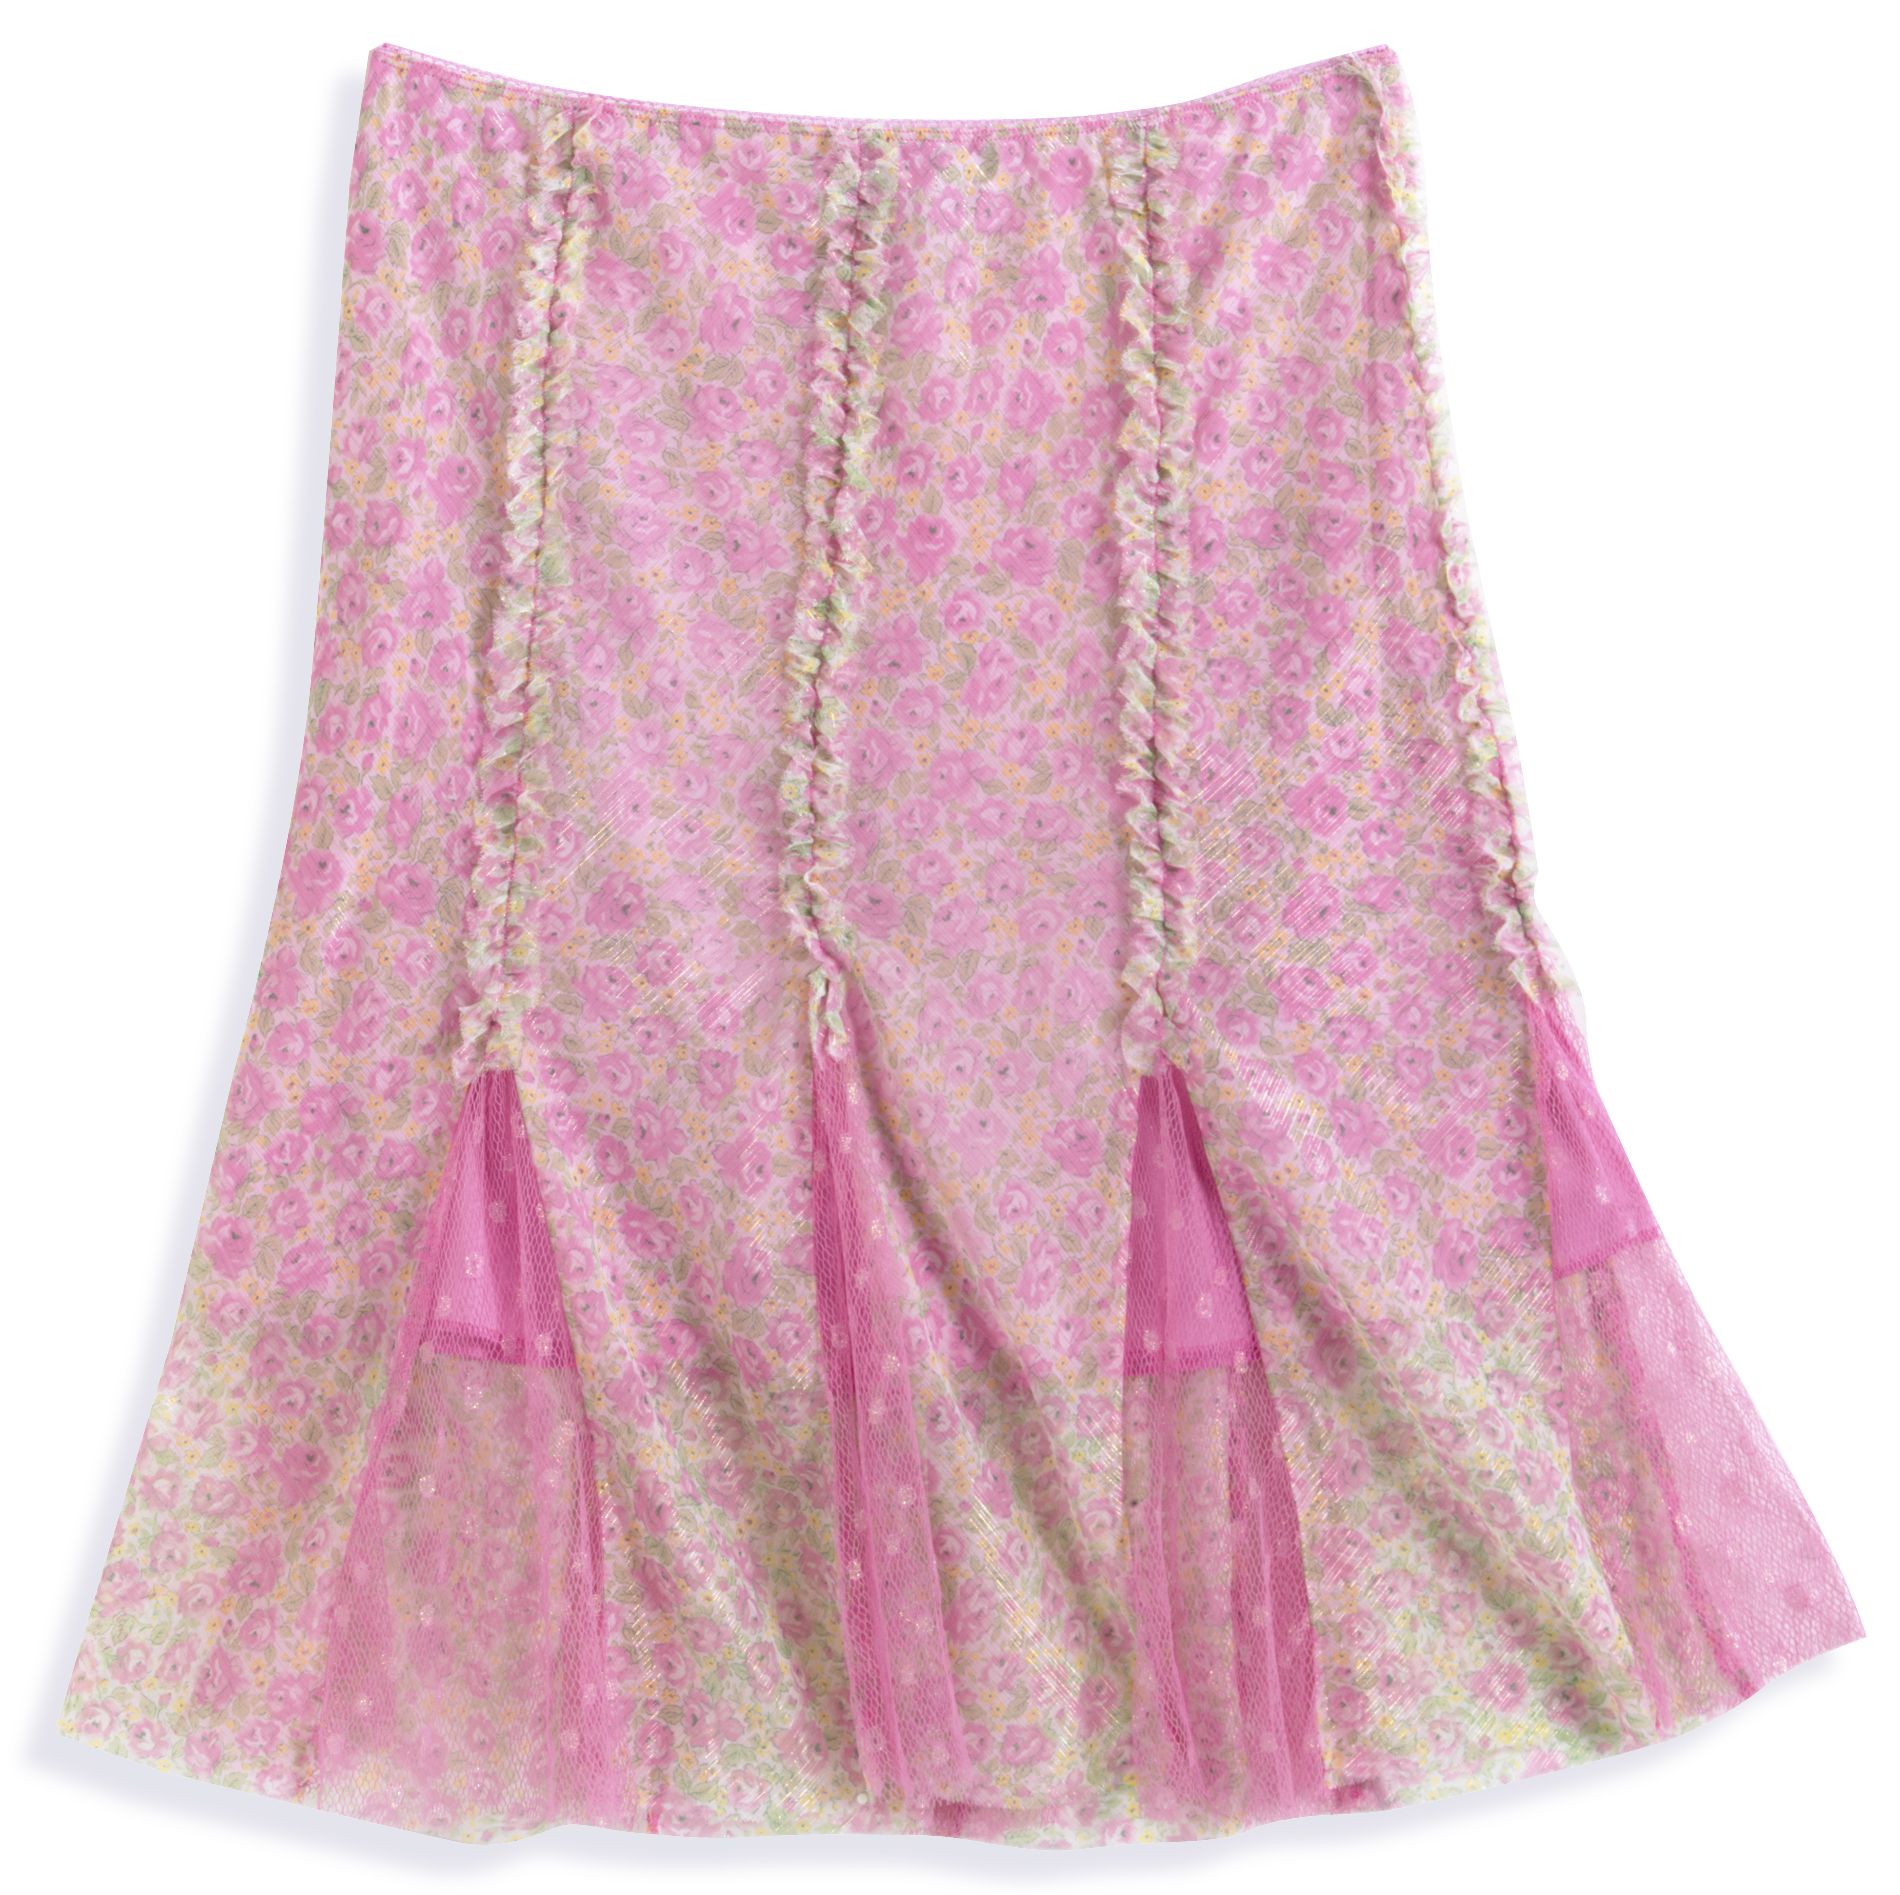 Luna Chix Chiffon Ditzy Floral Lace Inset Prairie Skirt